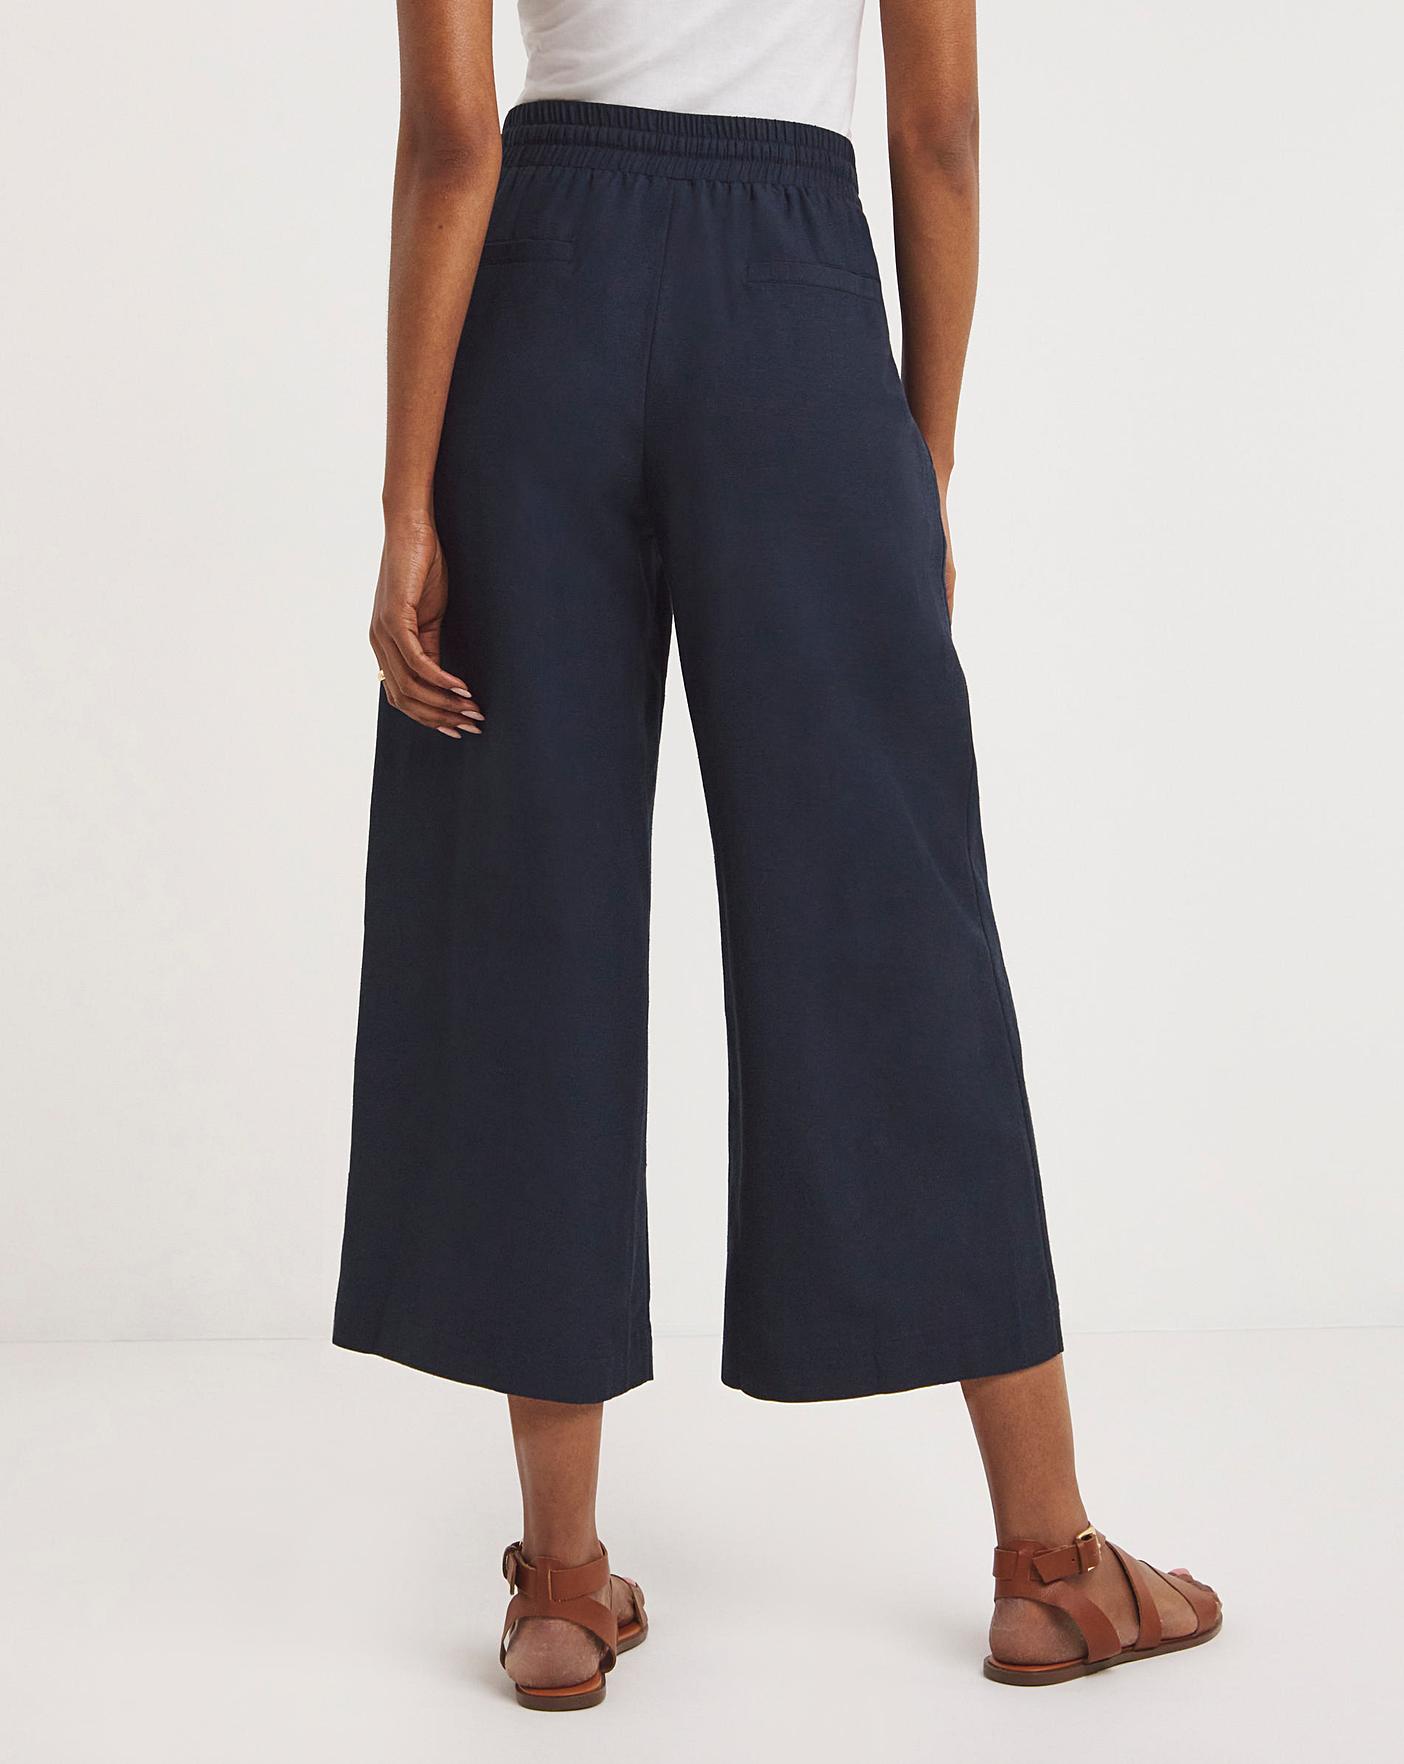 WOMEN'S LINEN PANTS Blue Palazzo Pants, Linen Culottes, High Waist Pants,  Wide Leg Trousers, Maxi Loose Pants, Boho Trousers, Sondeflor -   Singapore